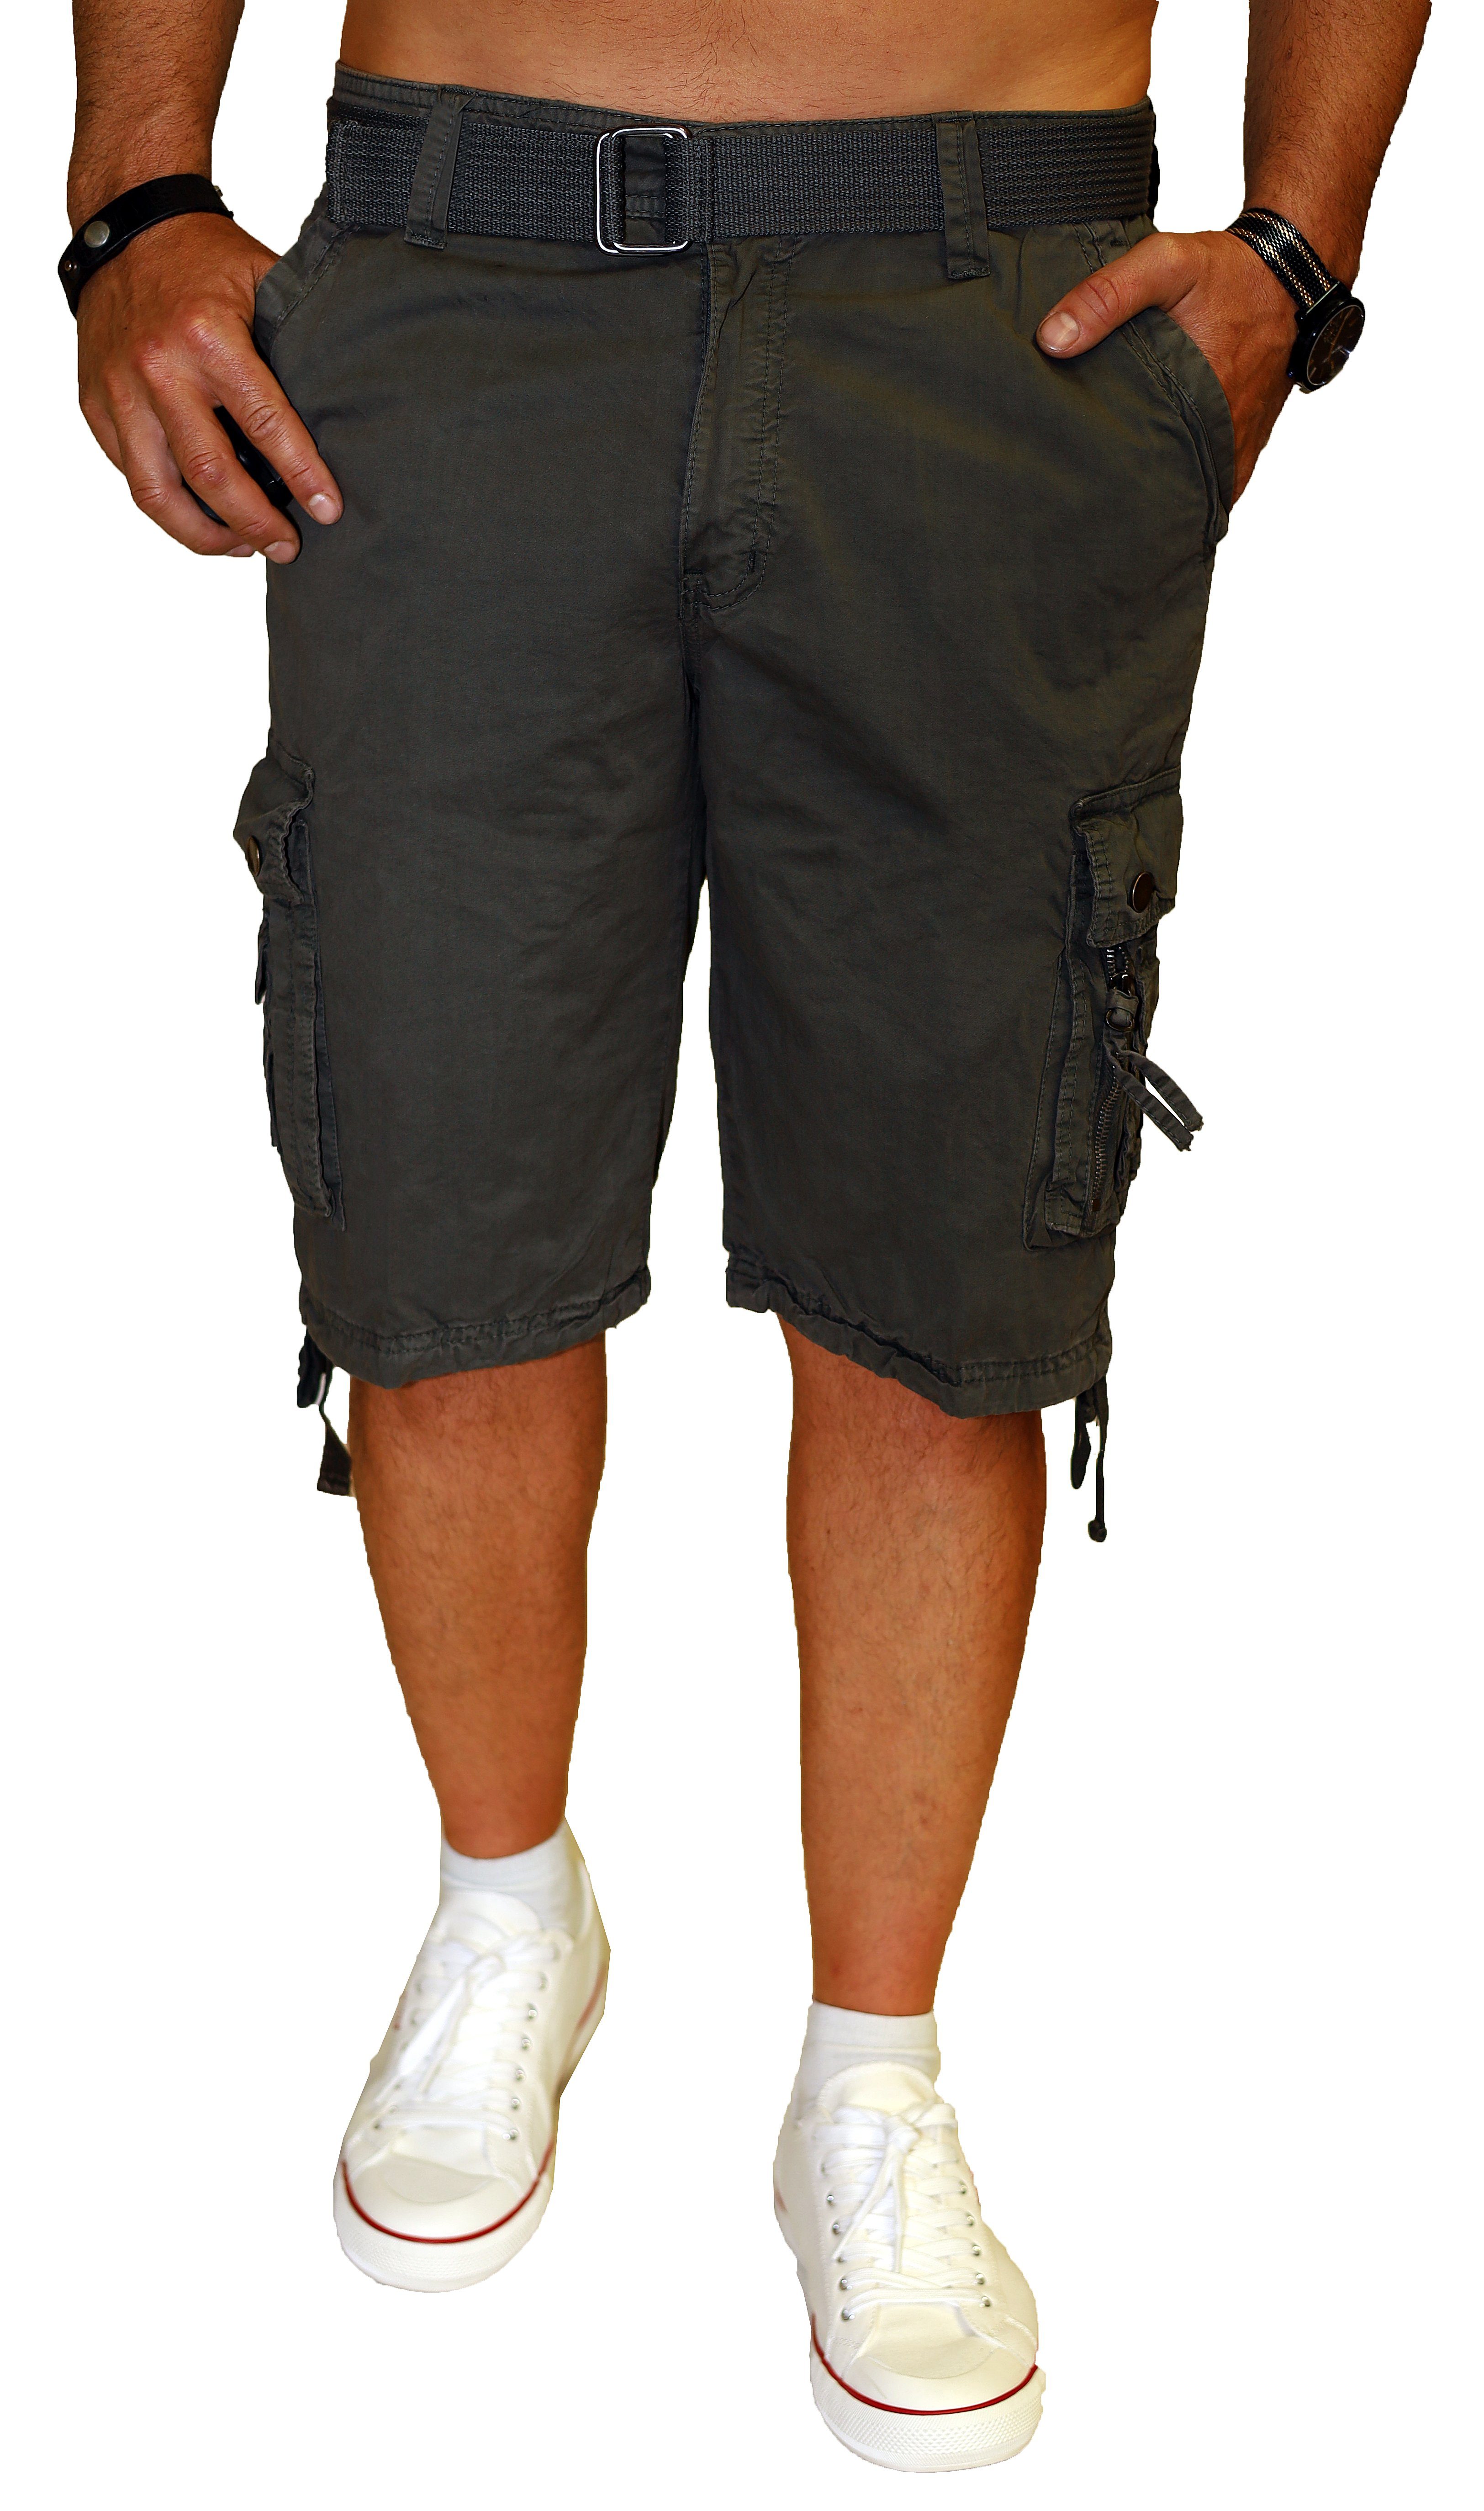 RMK Cargoshorts Herren Bermuda kurze Hose Set Short + Gürtel in Unifarbe,  aus Baumwolle